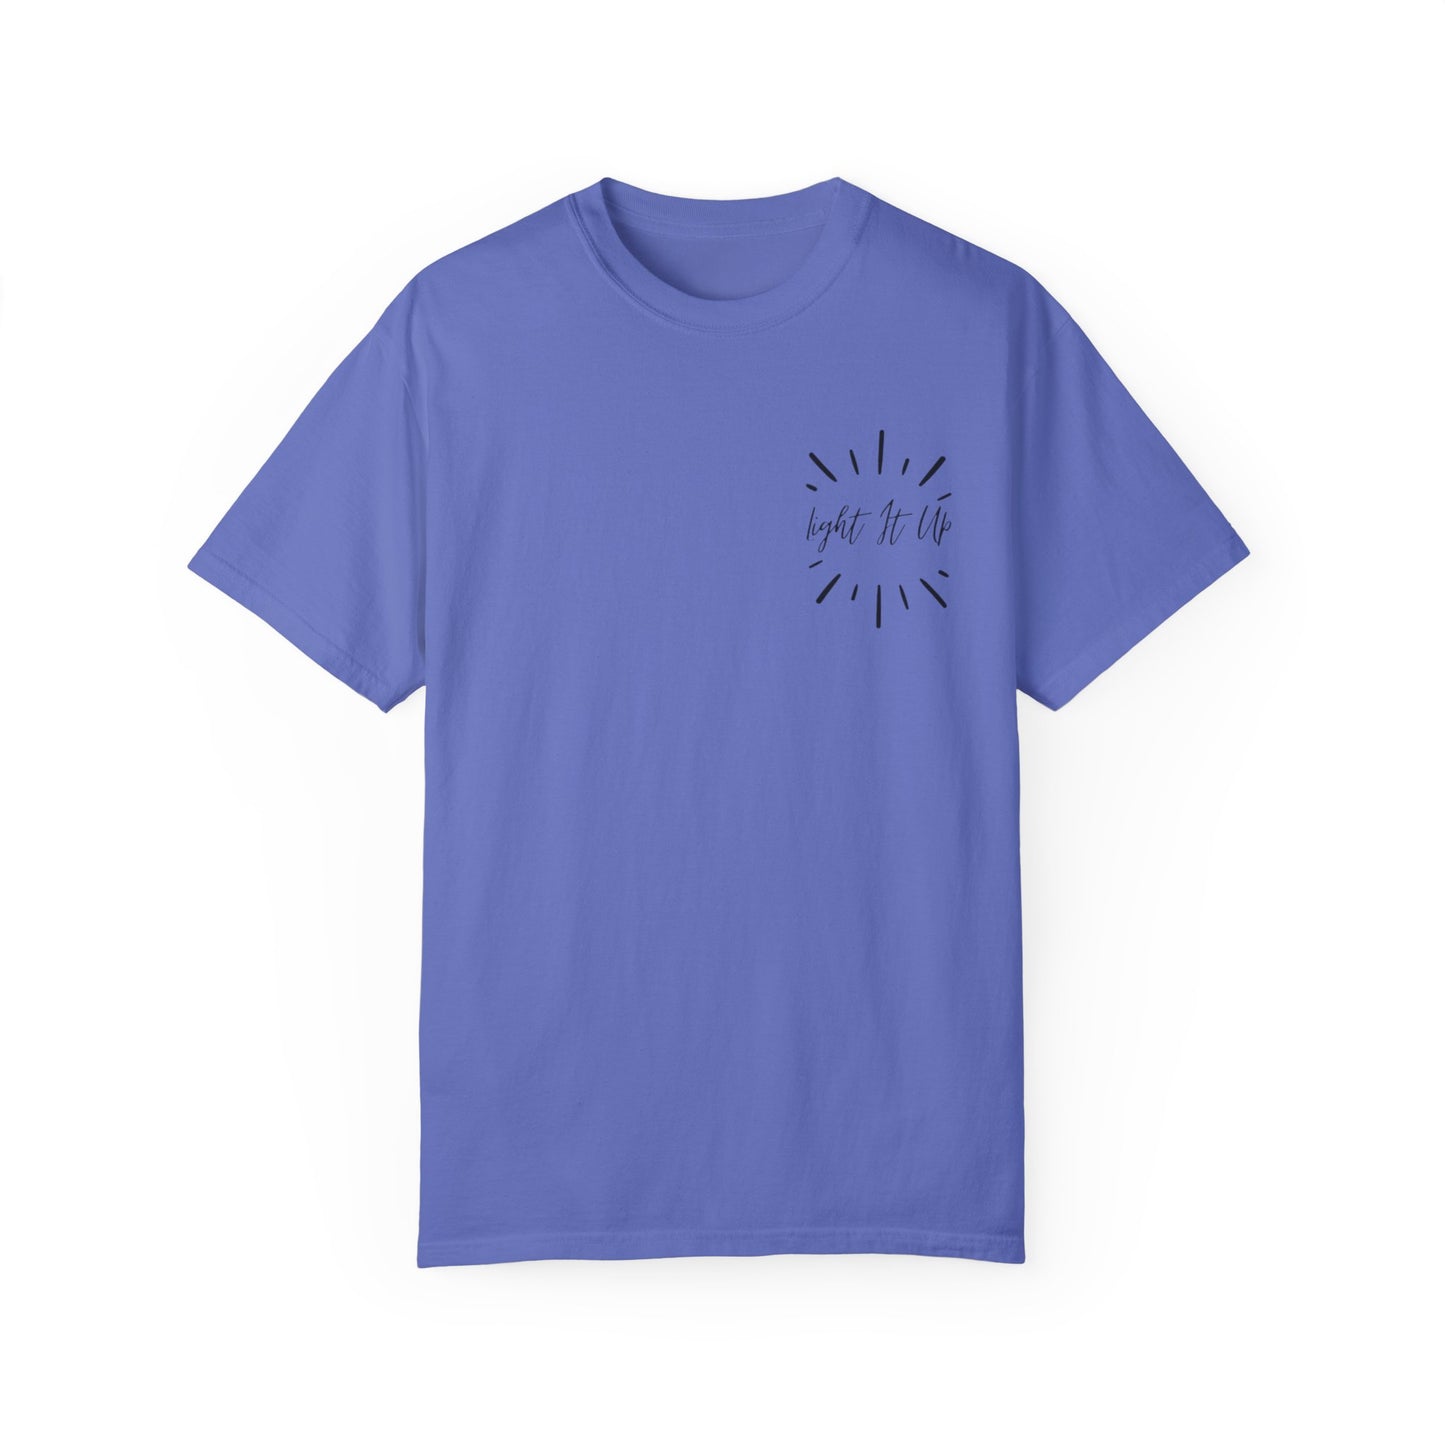 SJM Crescent City T-shirt